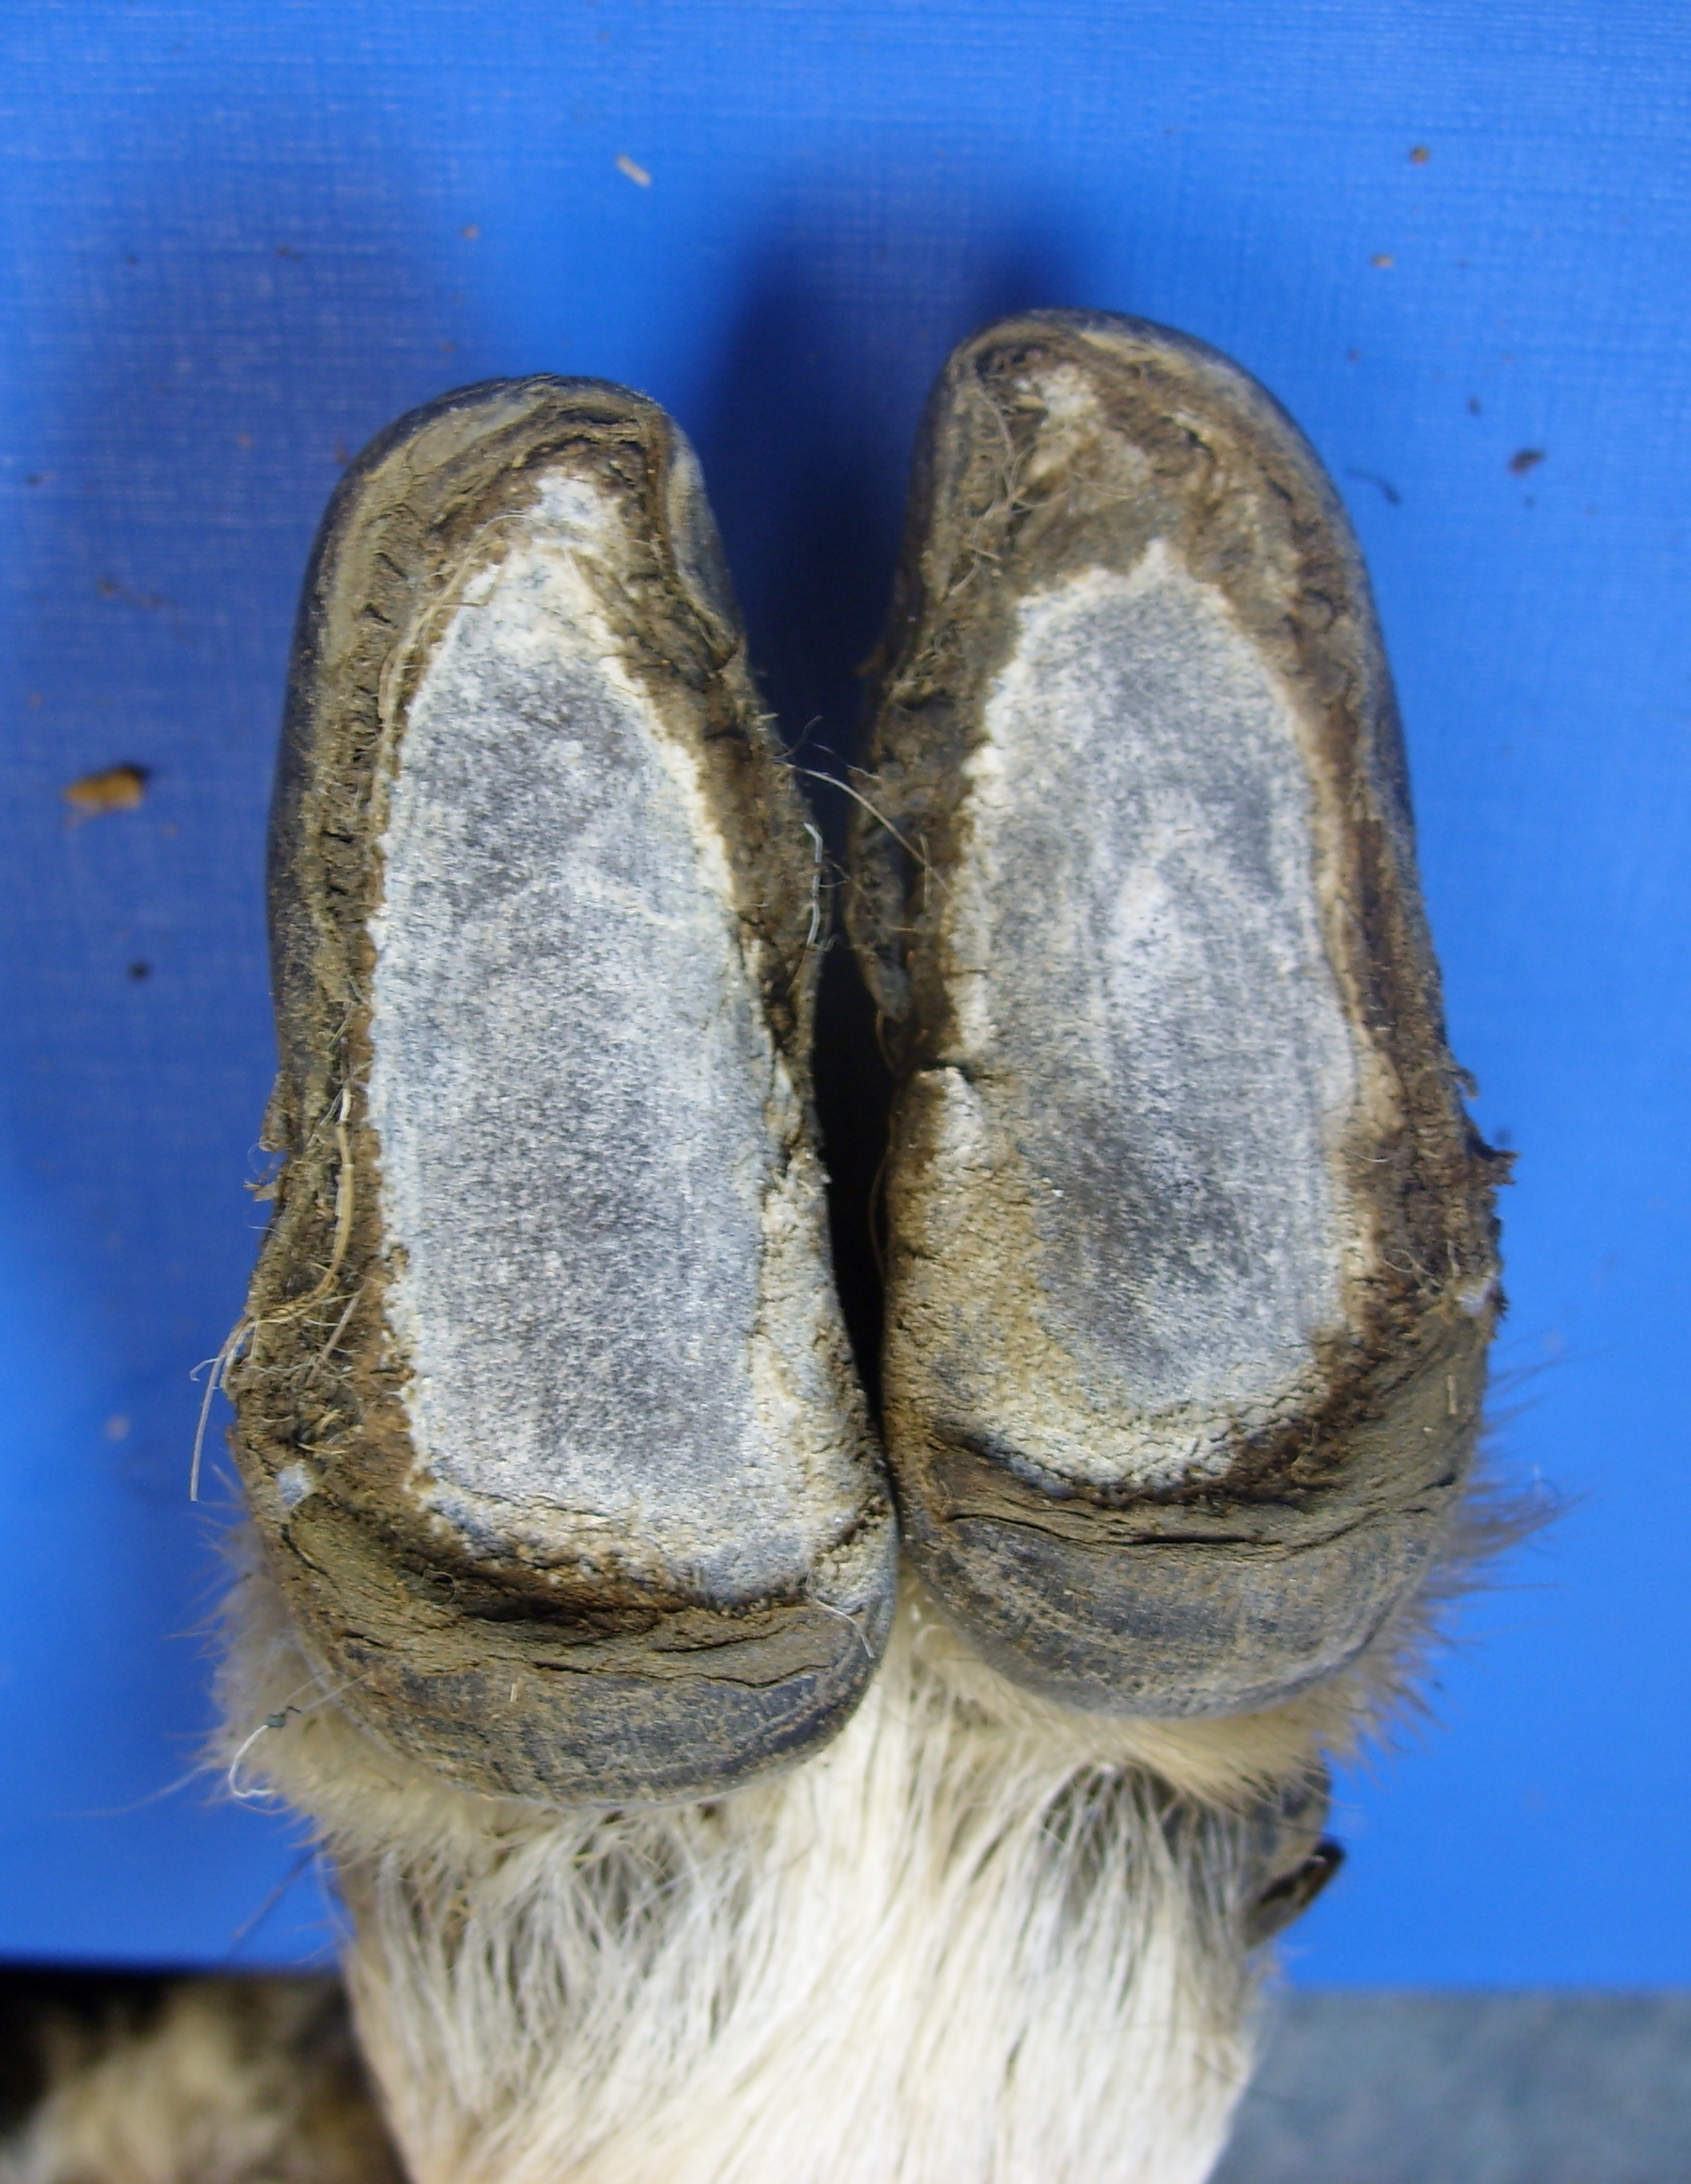 Healthy sheep's foot, copyright University of Warwick